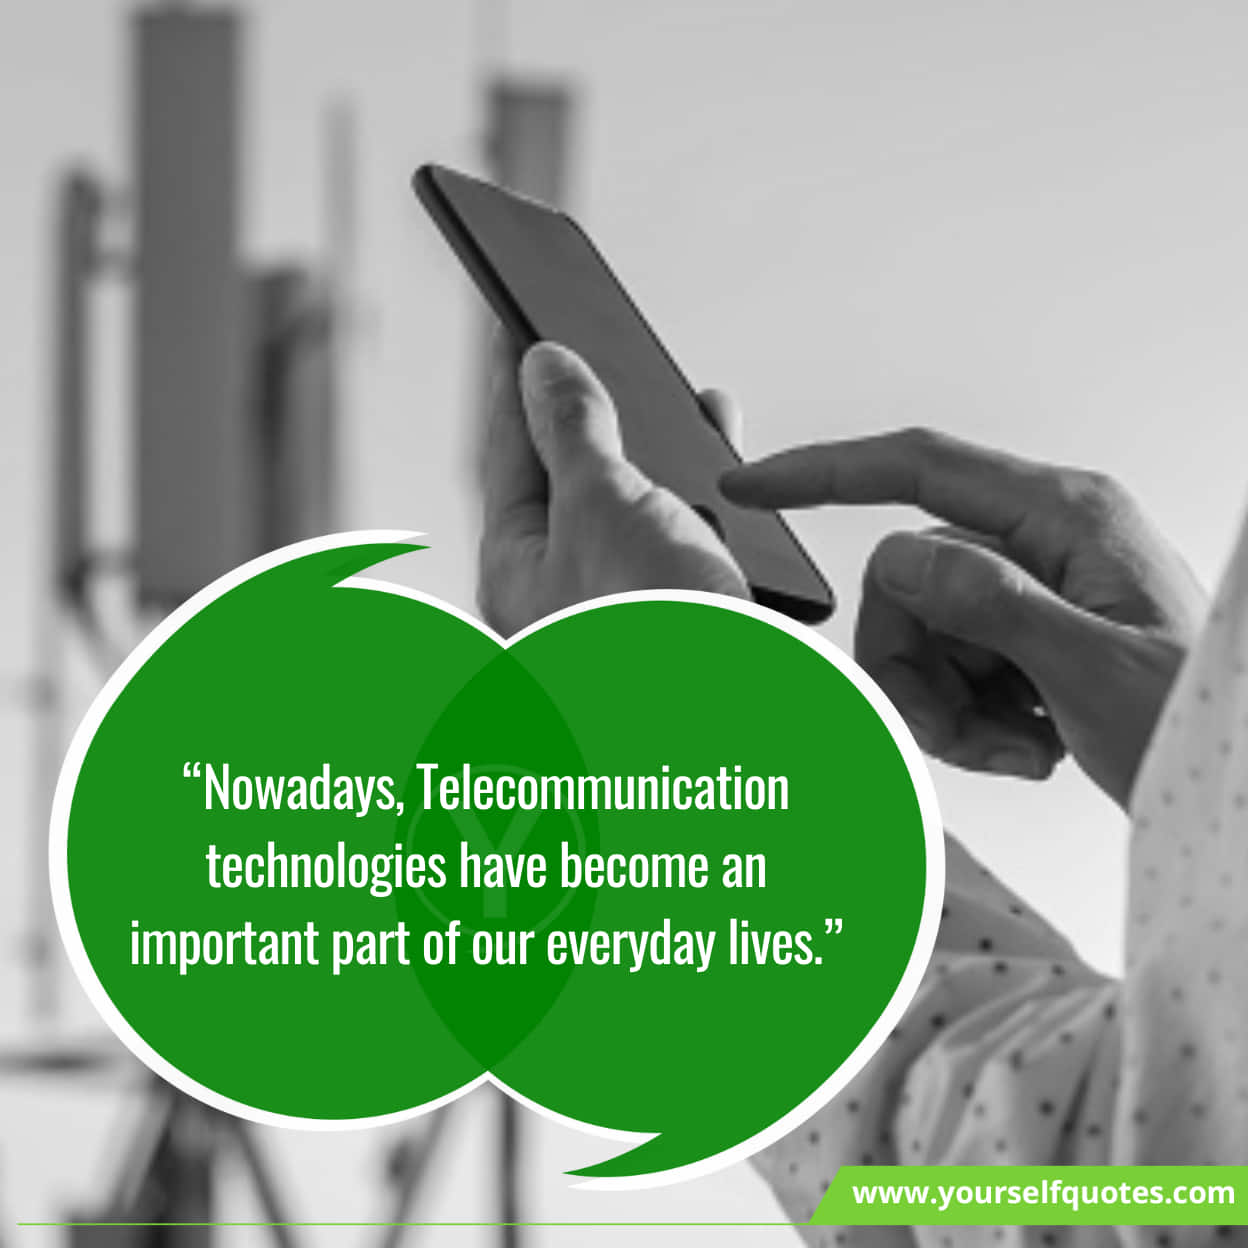 World Telecommunication Day Quotes